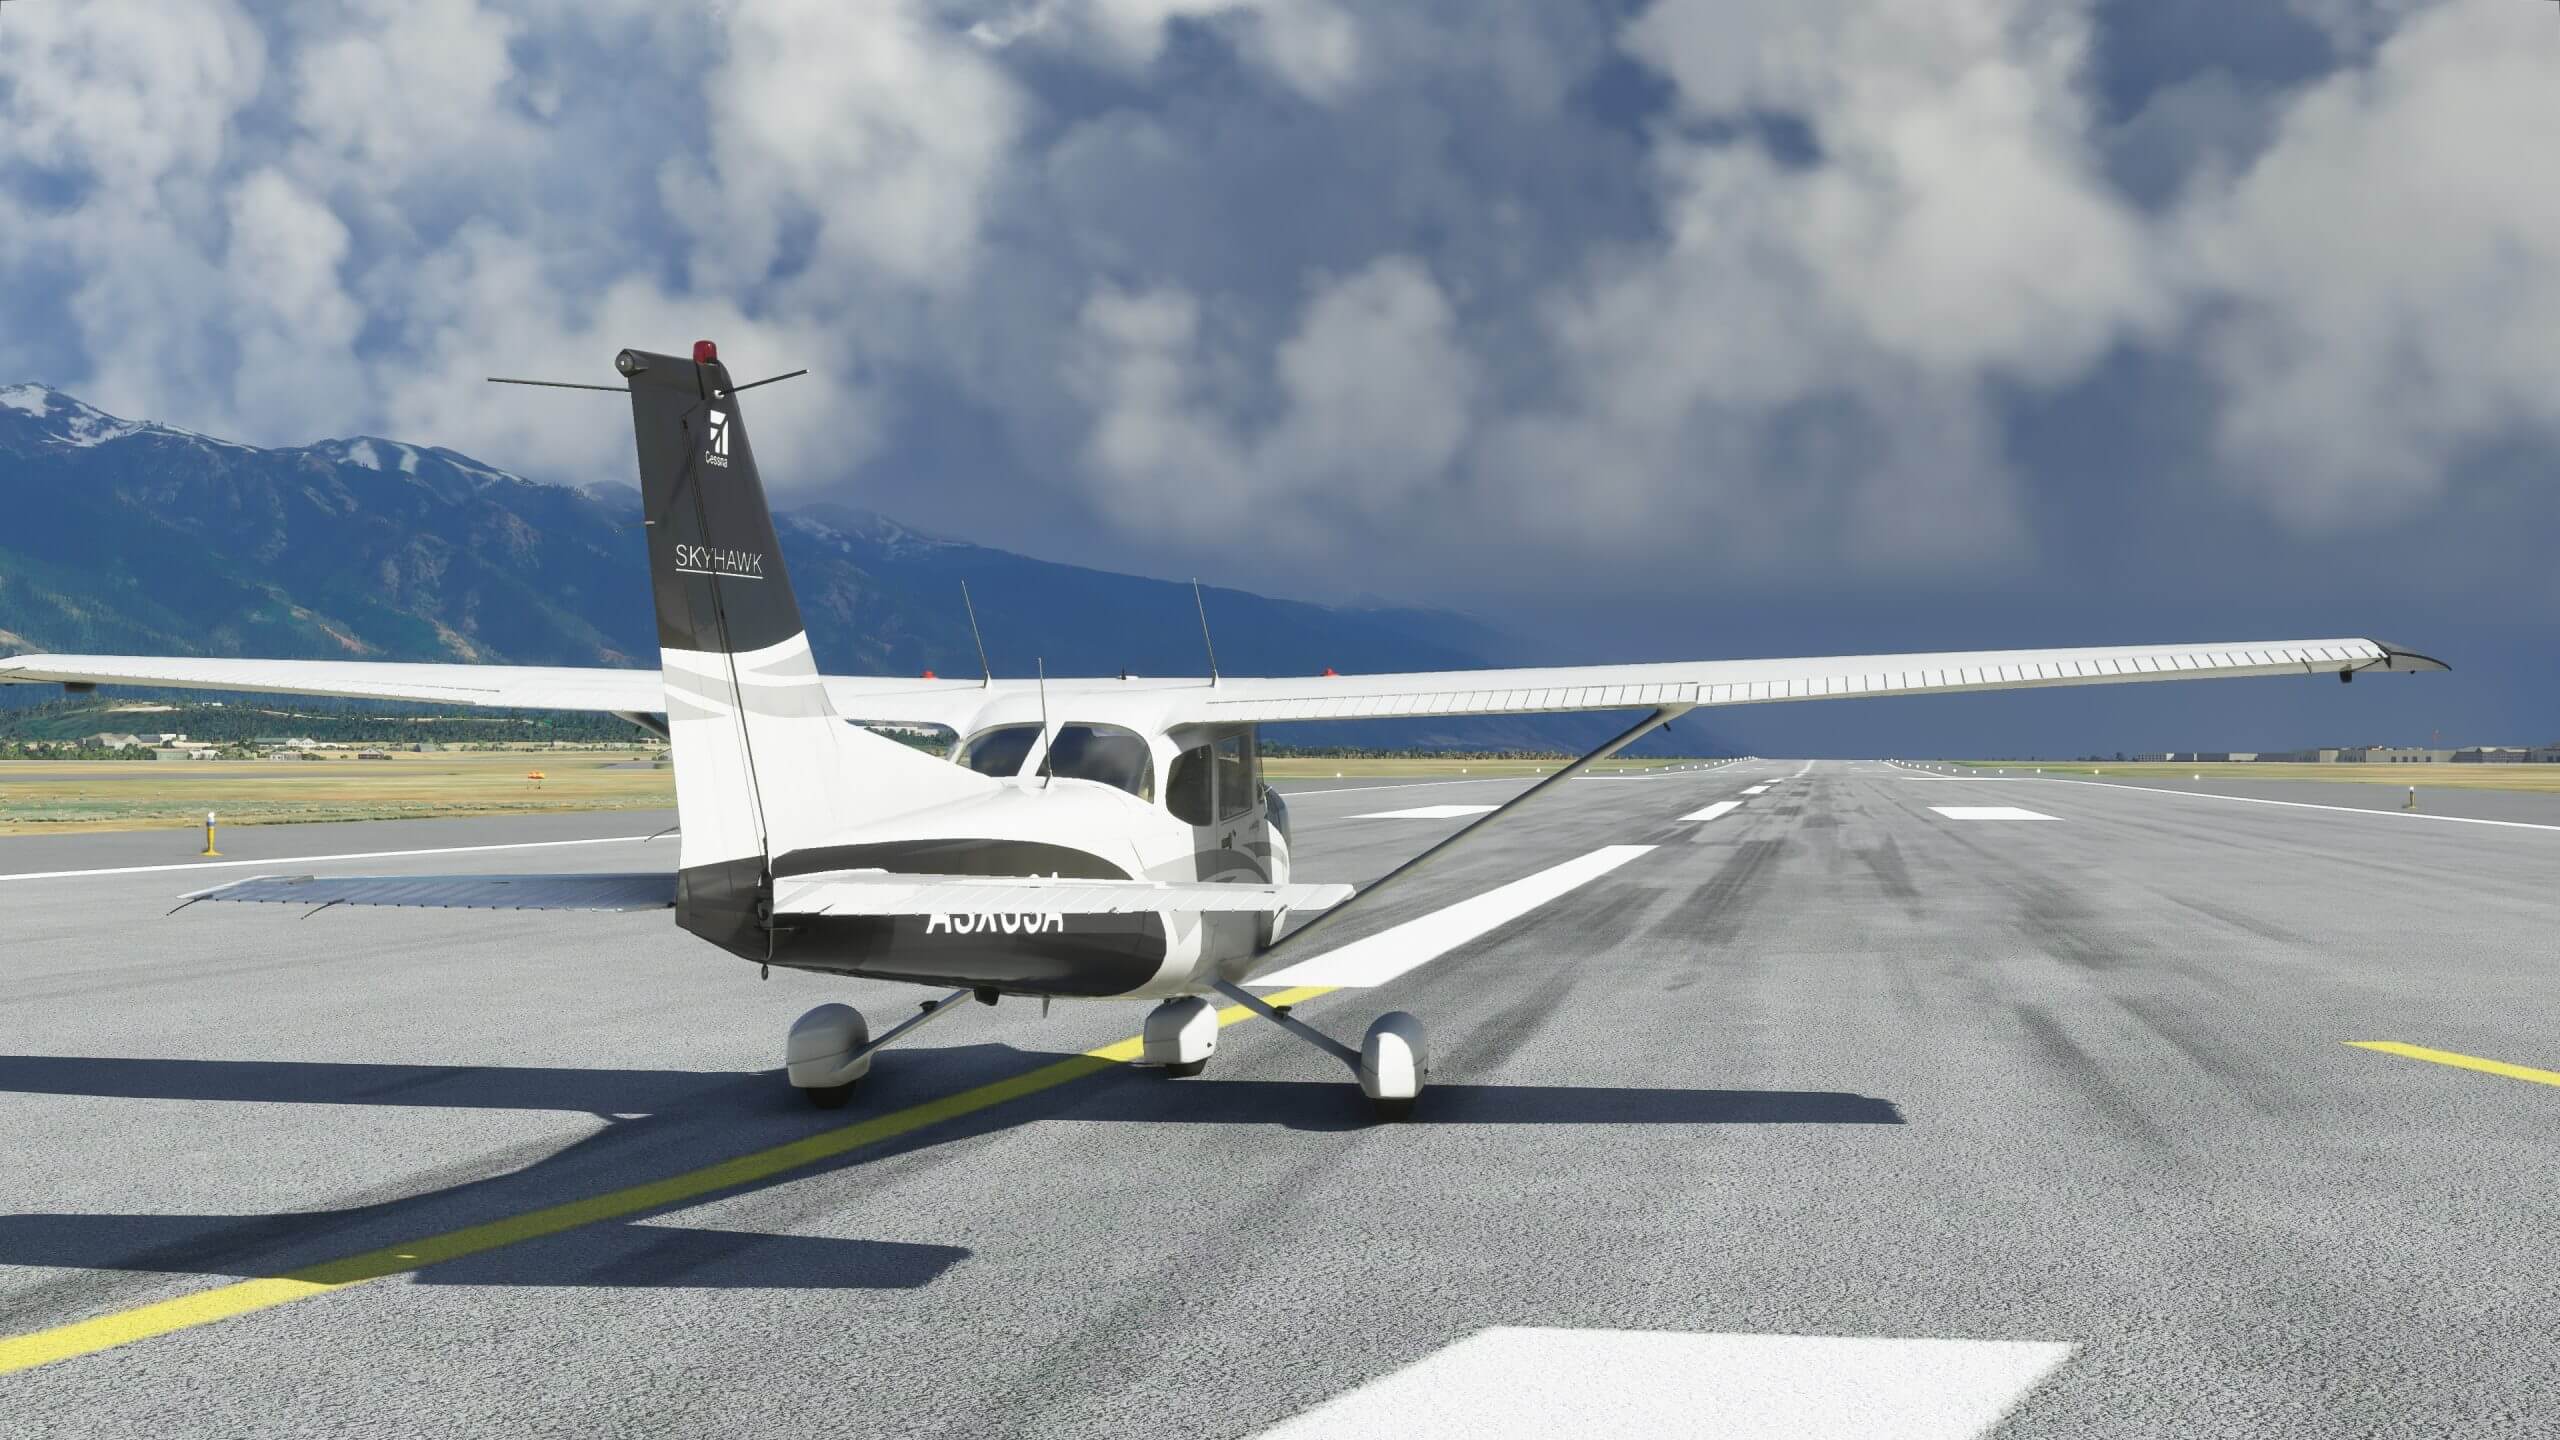 Mfs 2020 купить. MS FS 2020. Flight Simulator 2020. Microsoft Flight Simulator. MS Flight Simulator 2020.